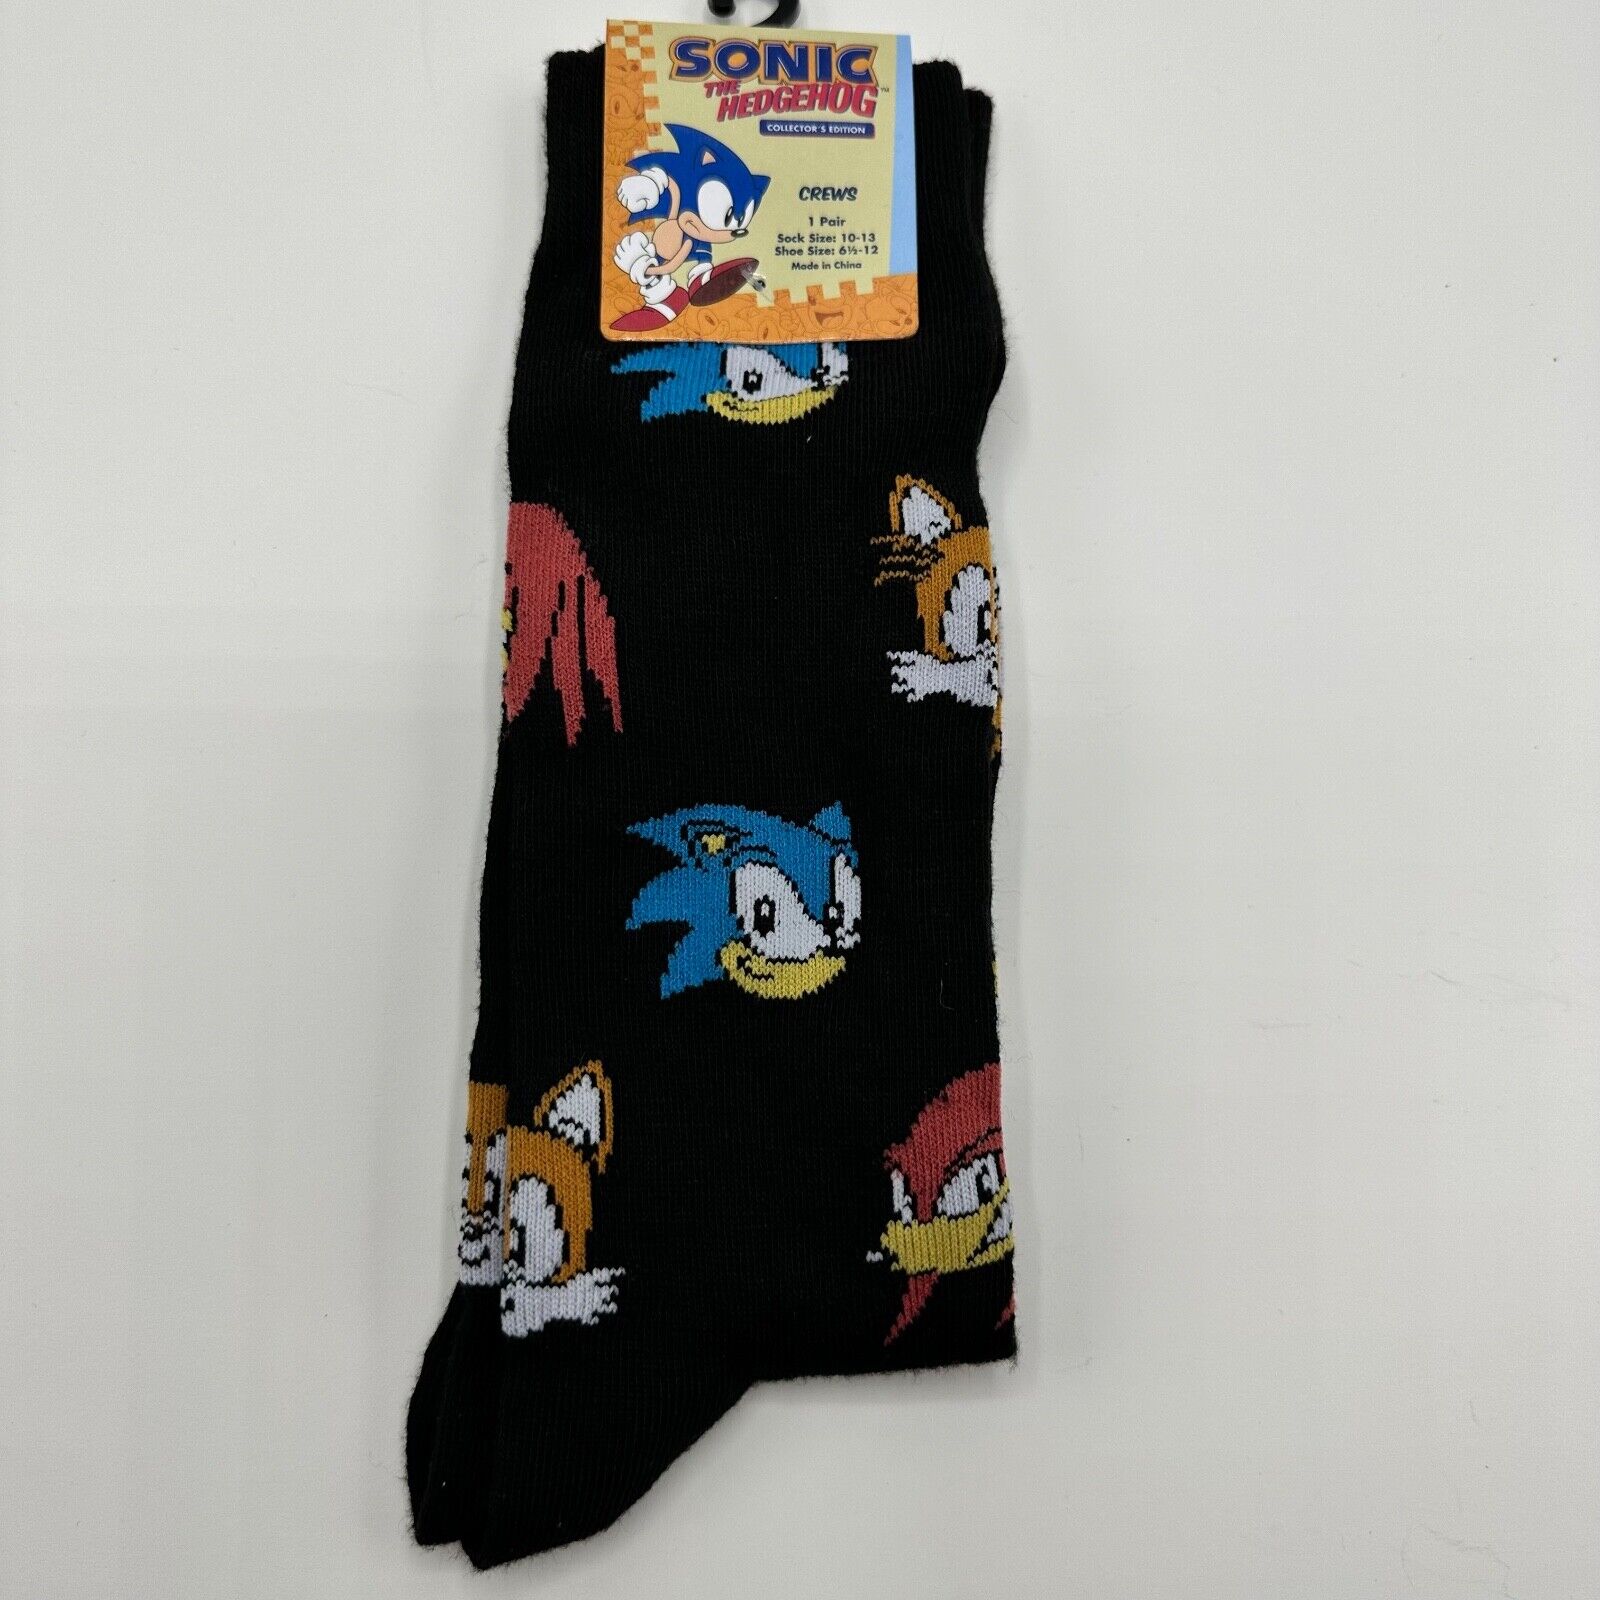 Sonic The Hedgehog Crew Men's Size 10-13 Socks No Brand